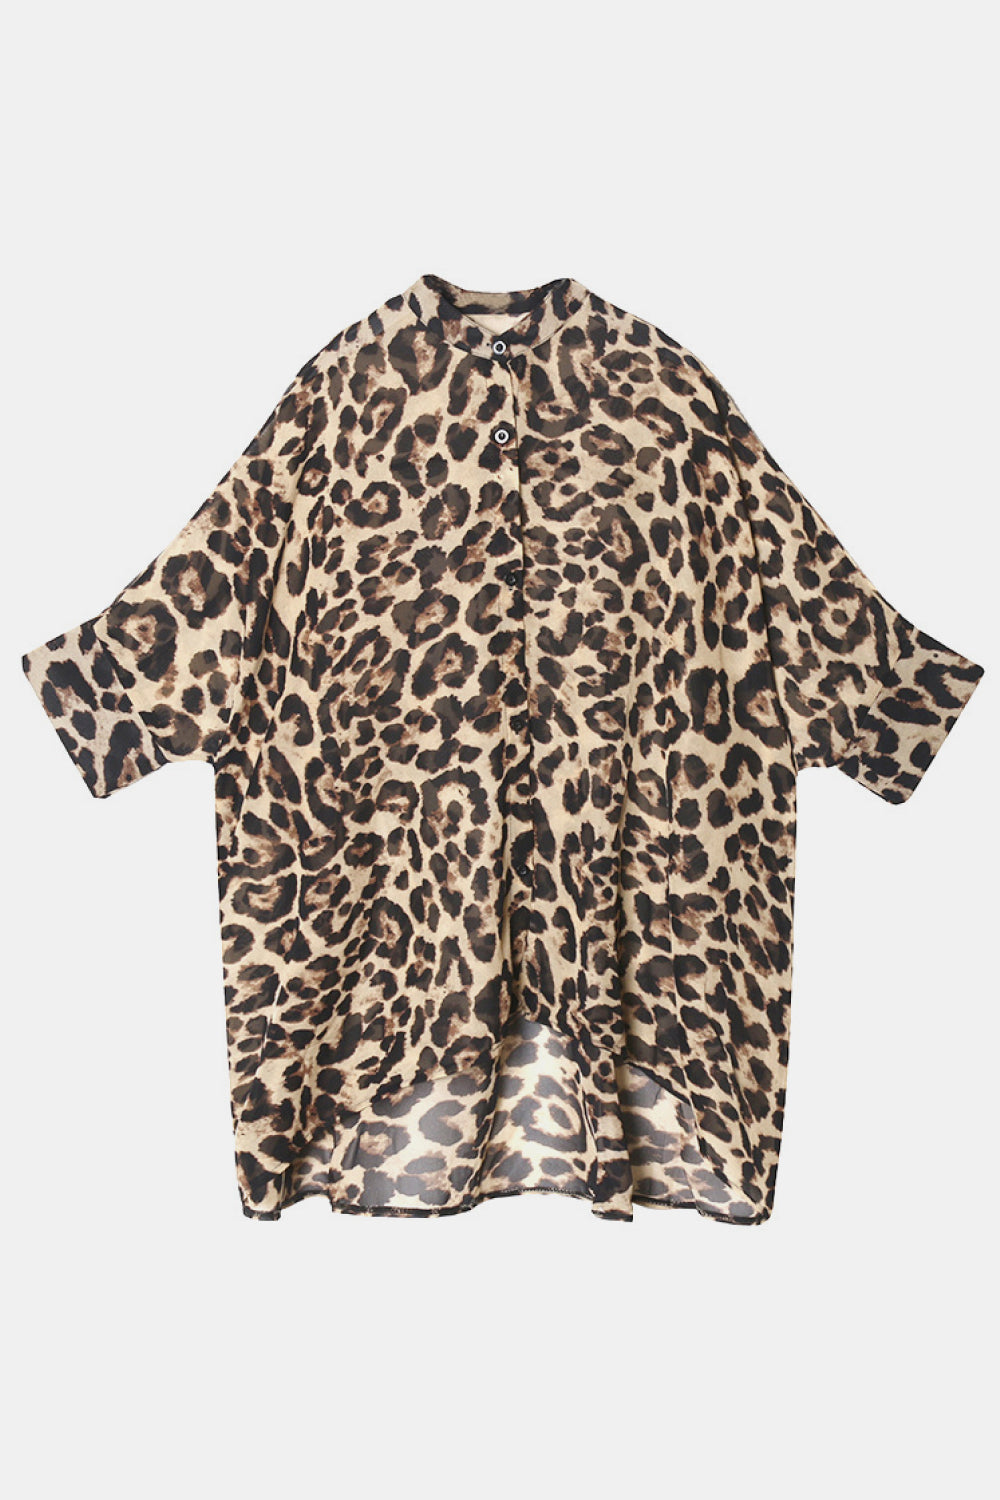 Leopard Print High-Low Button Down Blouse